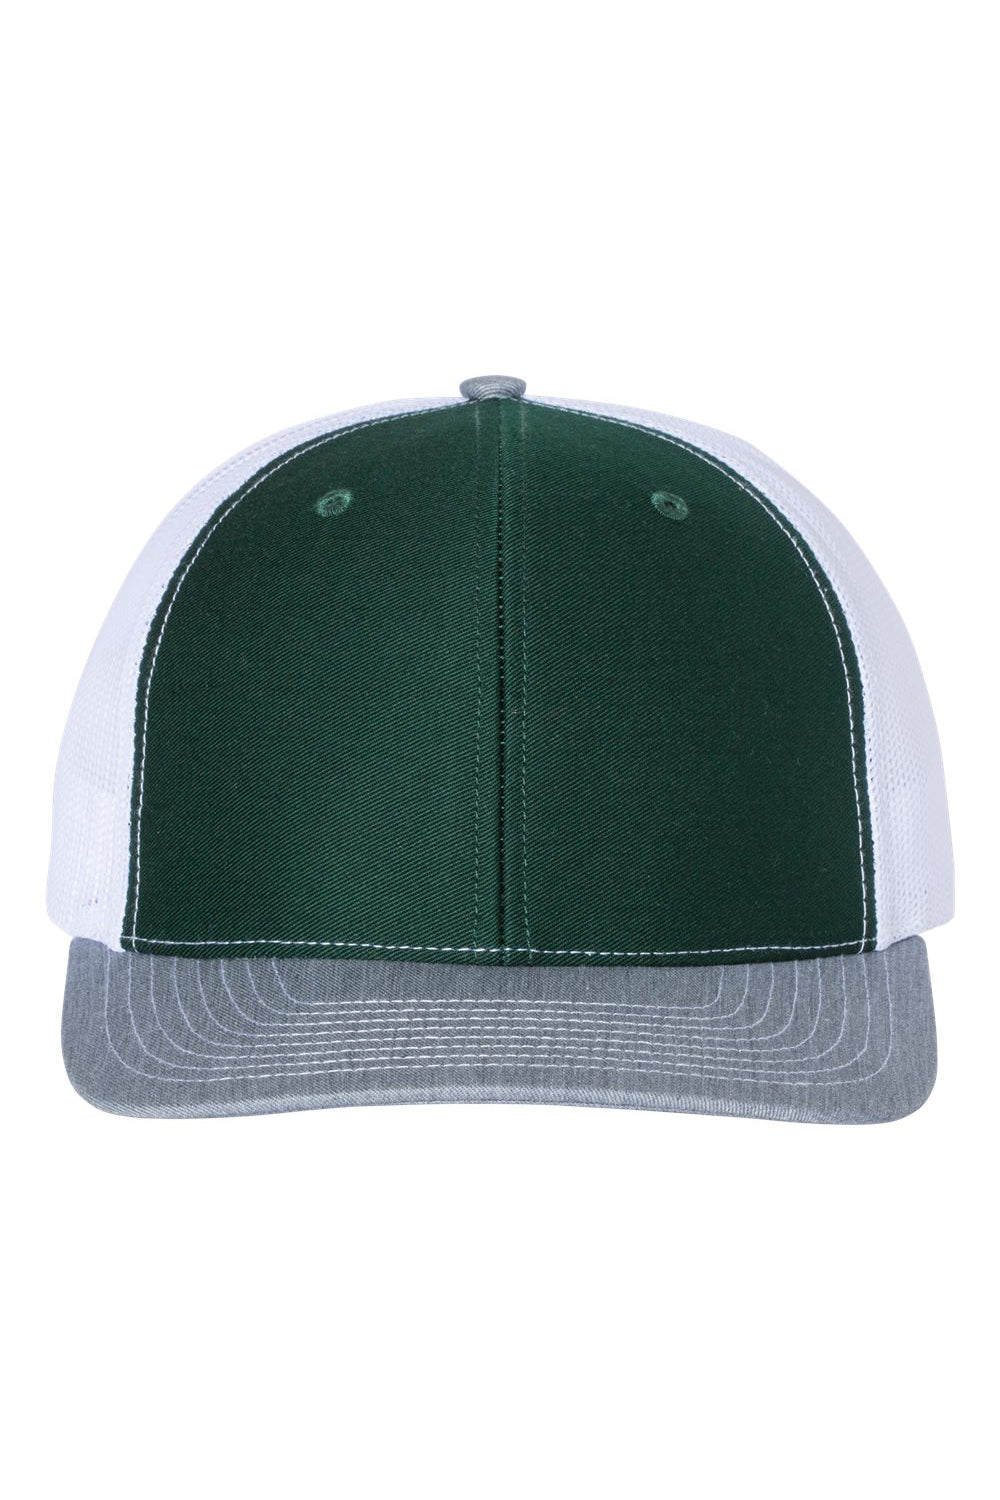 Richardson 112 Mens Snapback Trucker Hat Dark Green/White/Heather Grey Flat Front